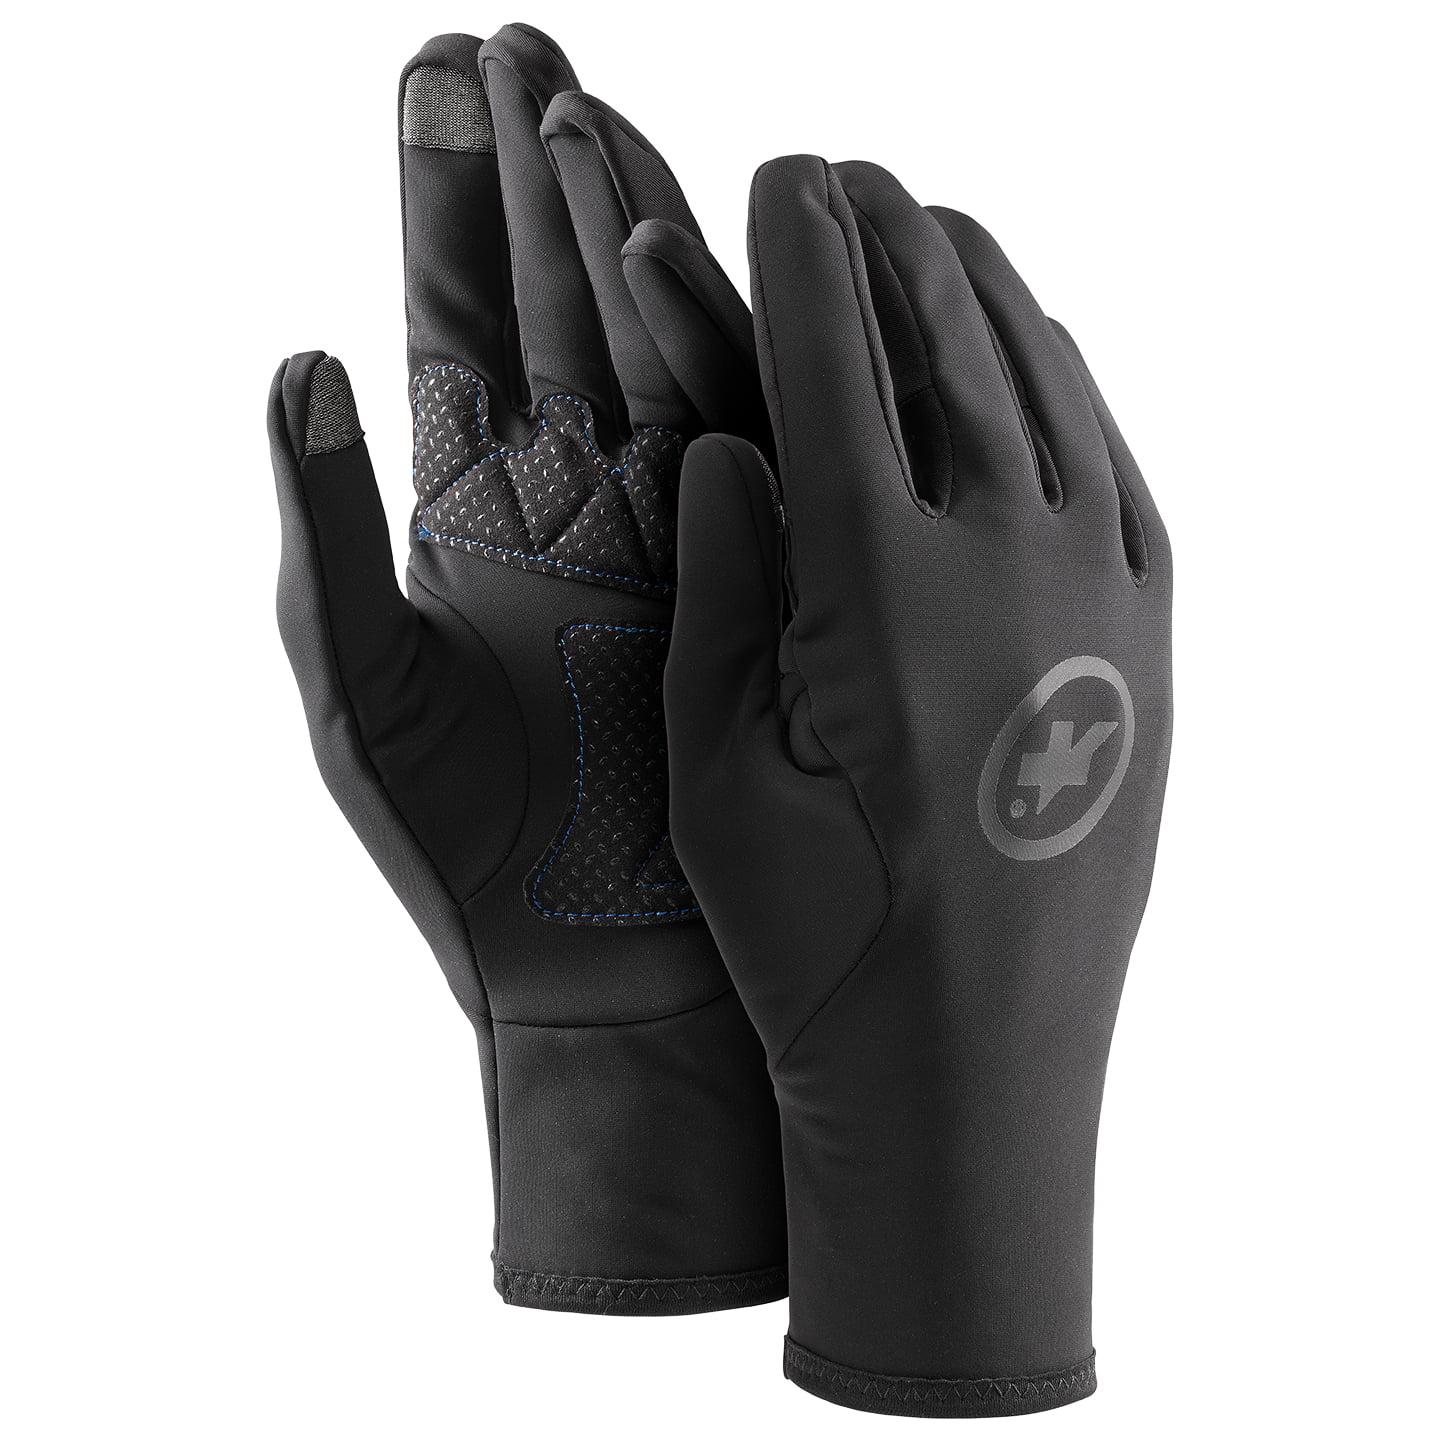 ASSOS EVO Winter Gloves Winter Cycling Gloves, for men, size S, Cycling gloves, Cycling clothing